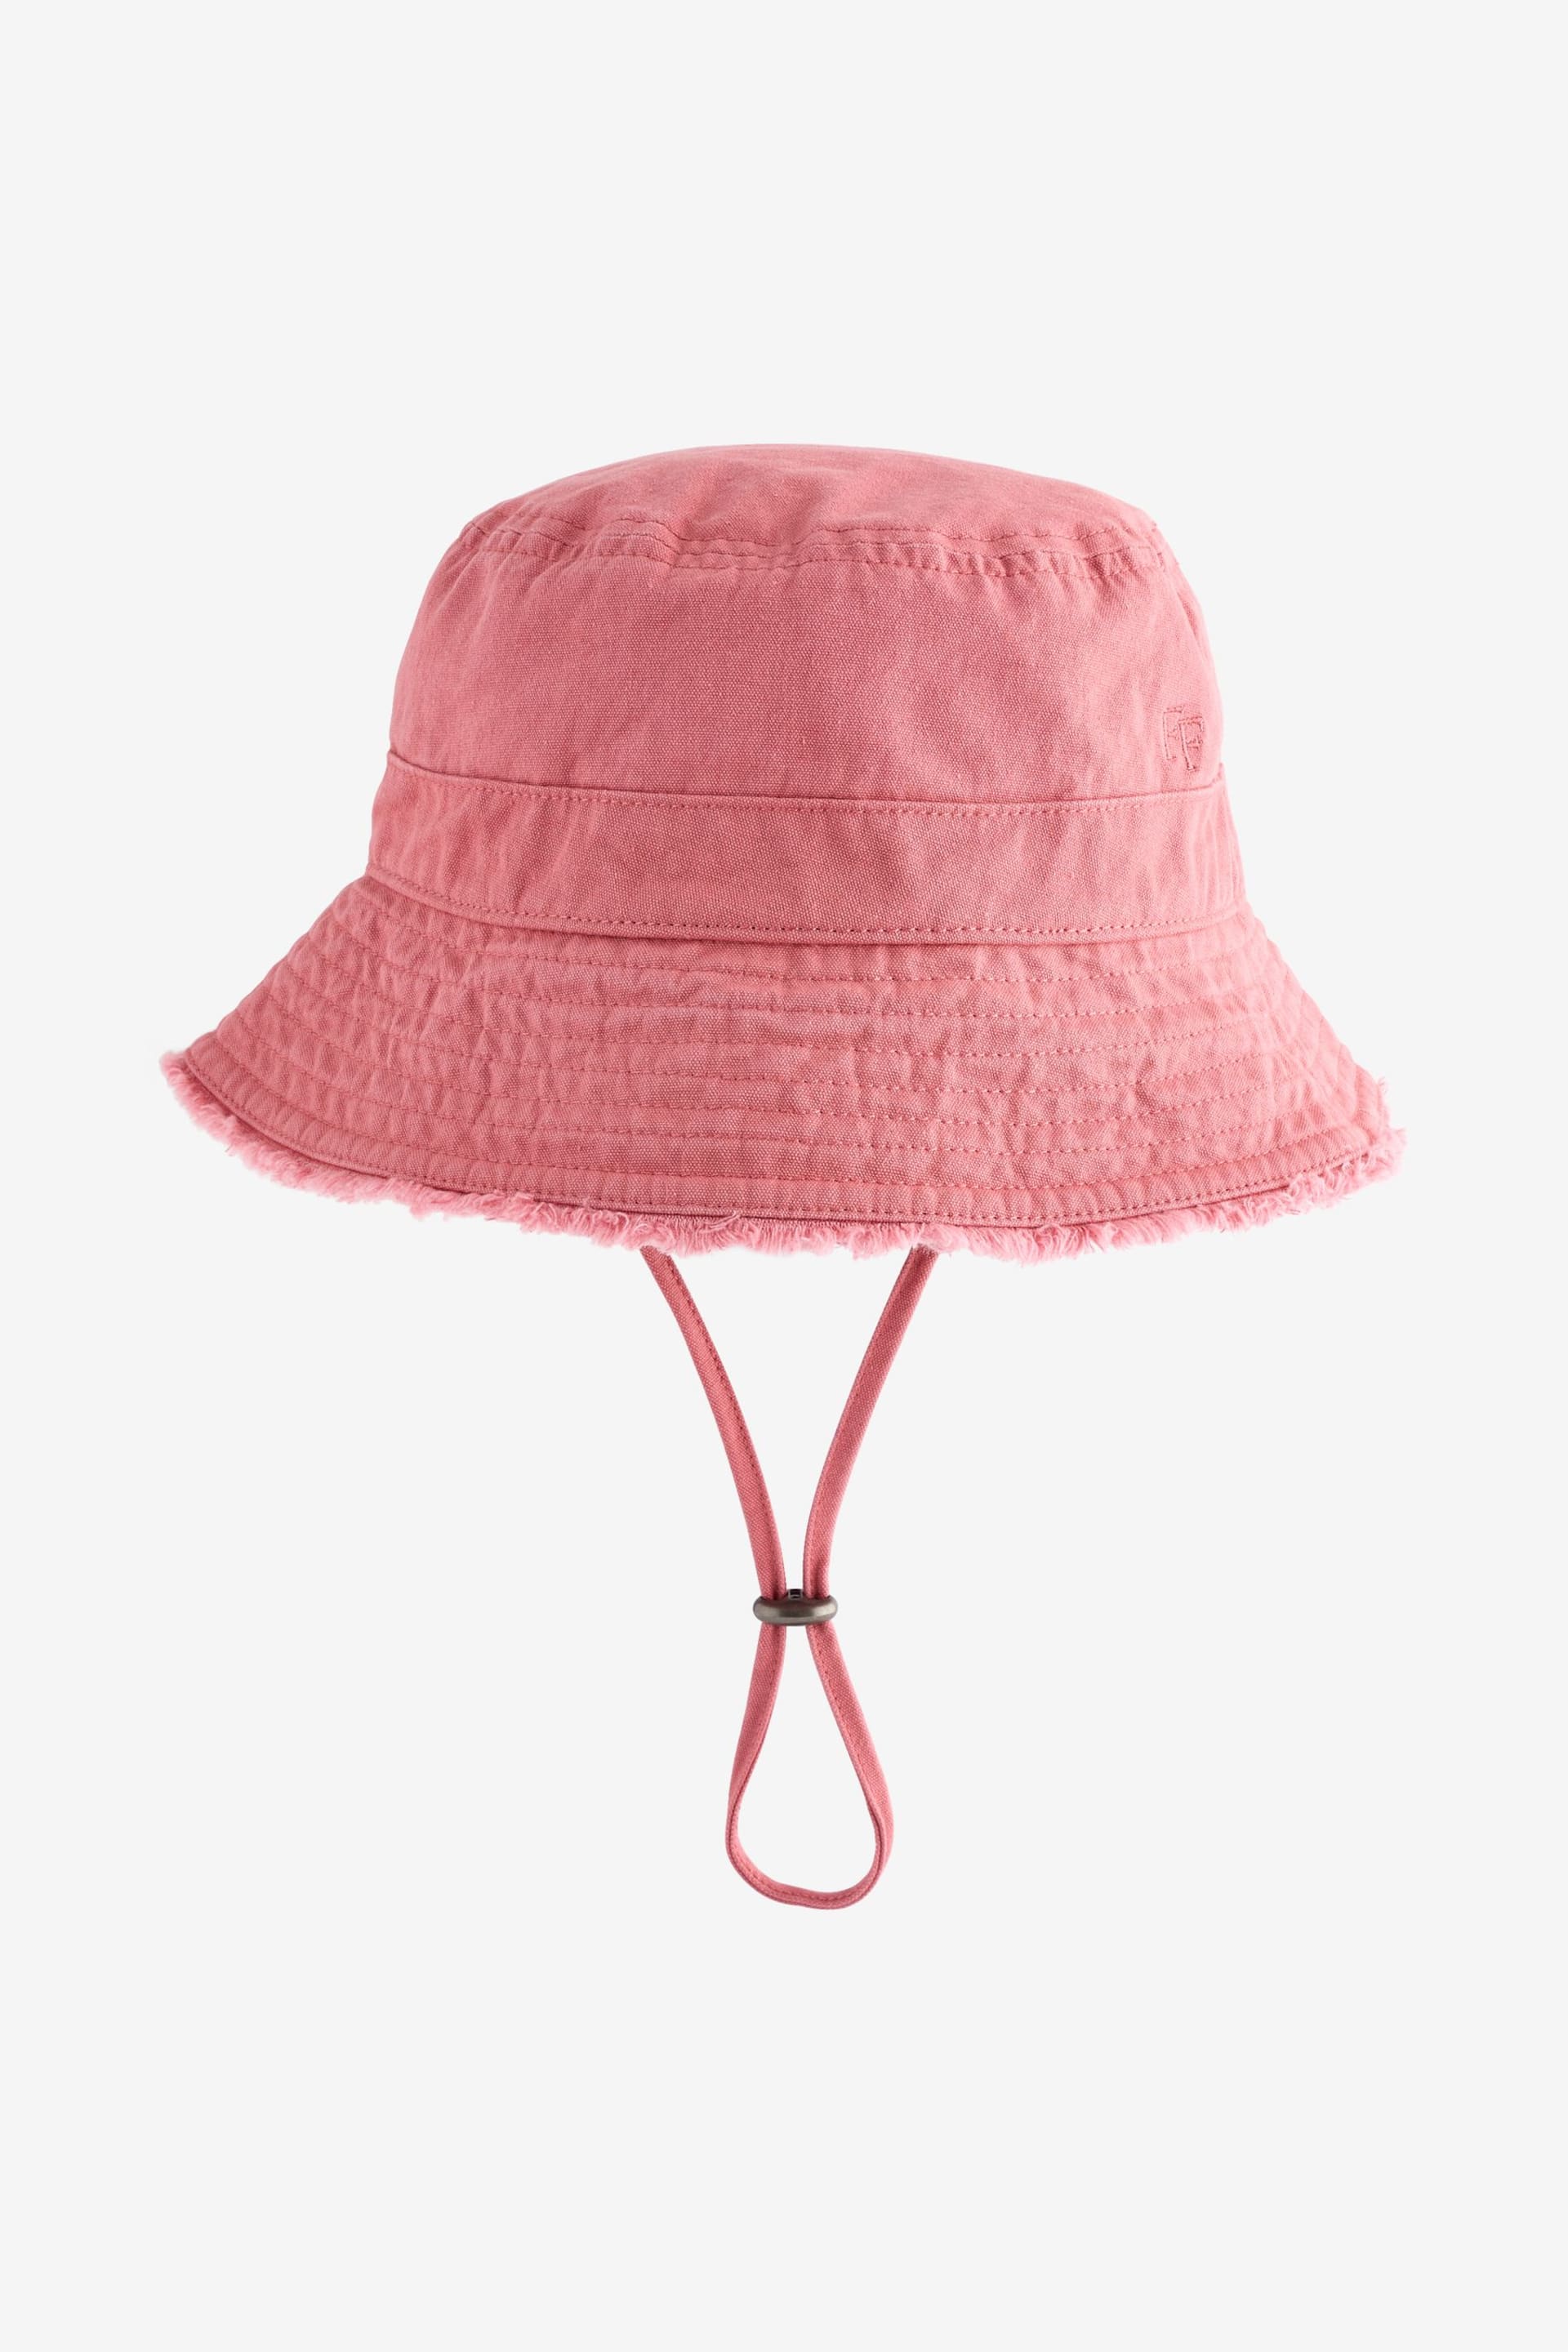 FatFace Pink Brisbane Bucket Hat - Image 1 of 3